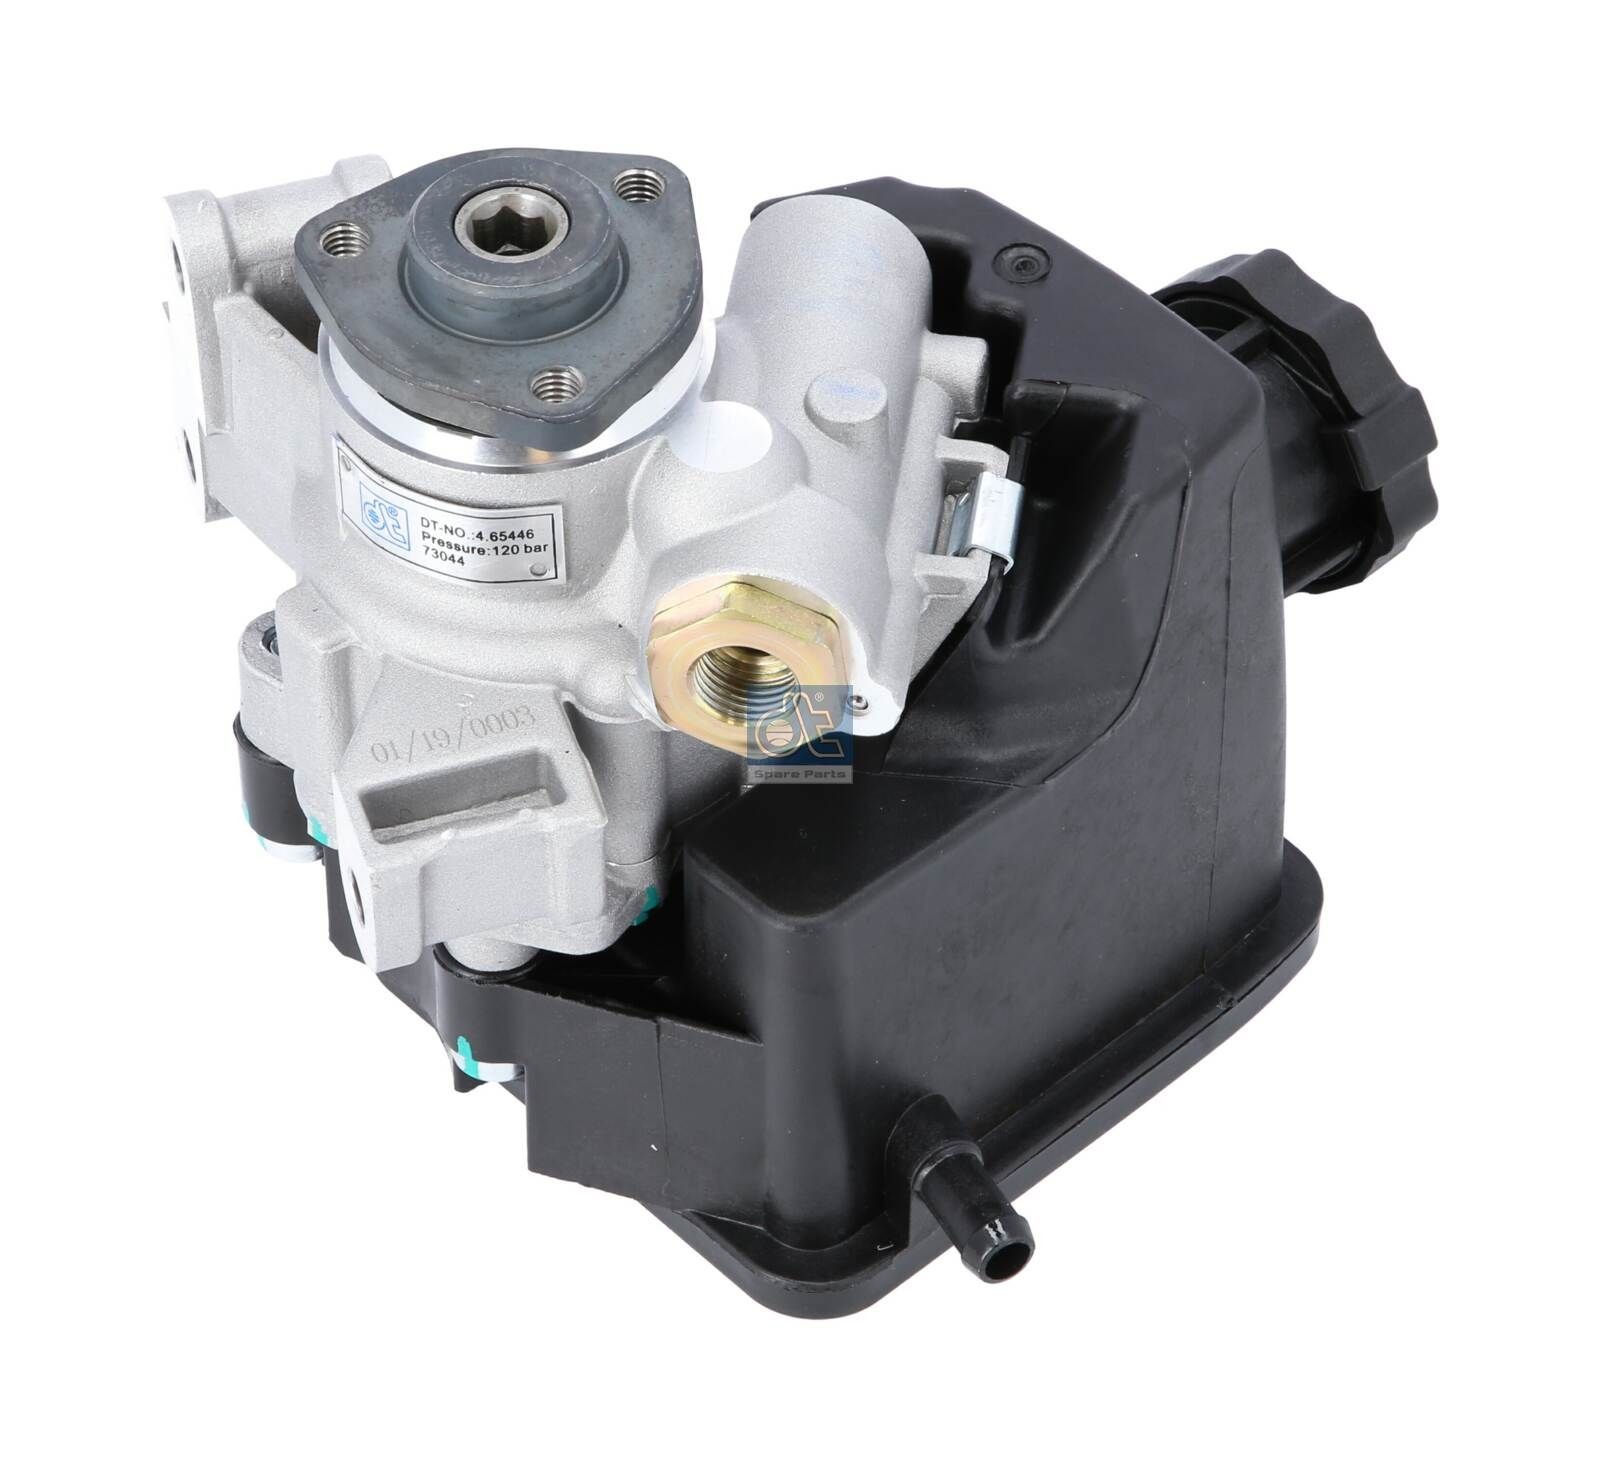 DT Spare Parts 4.65446 Power steering pump Hydraulic, 116 bar, Pressure-limiting Valve, M16x1,5, Vane Pump, Clockwise rotation